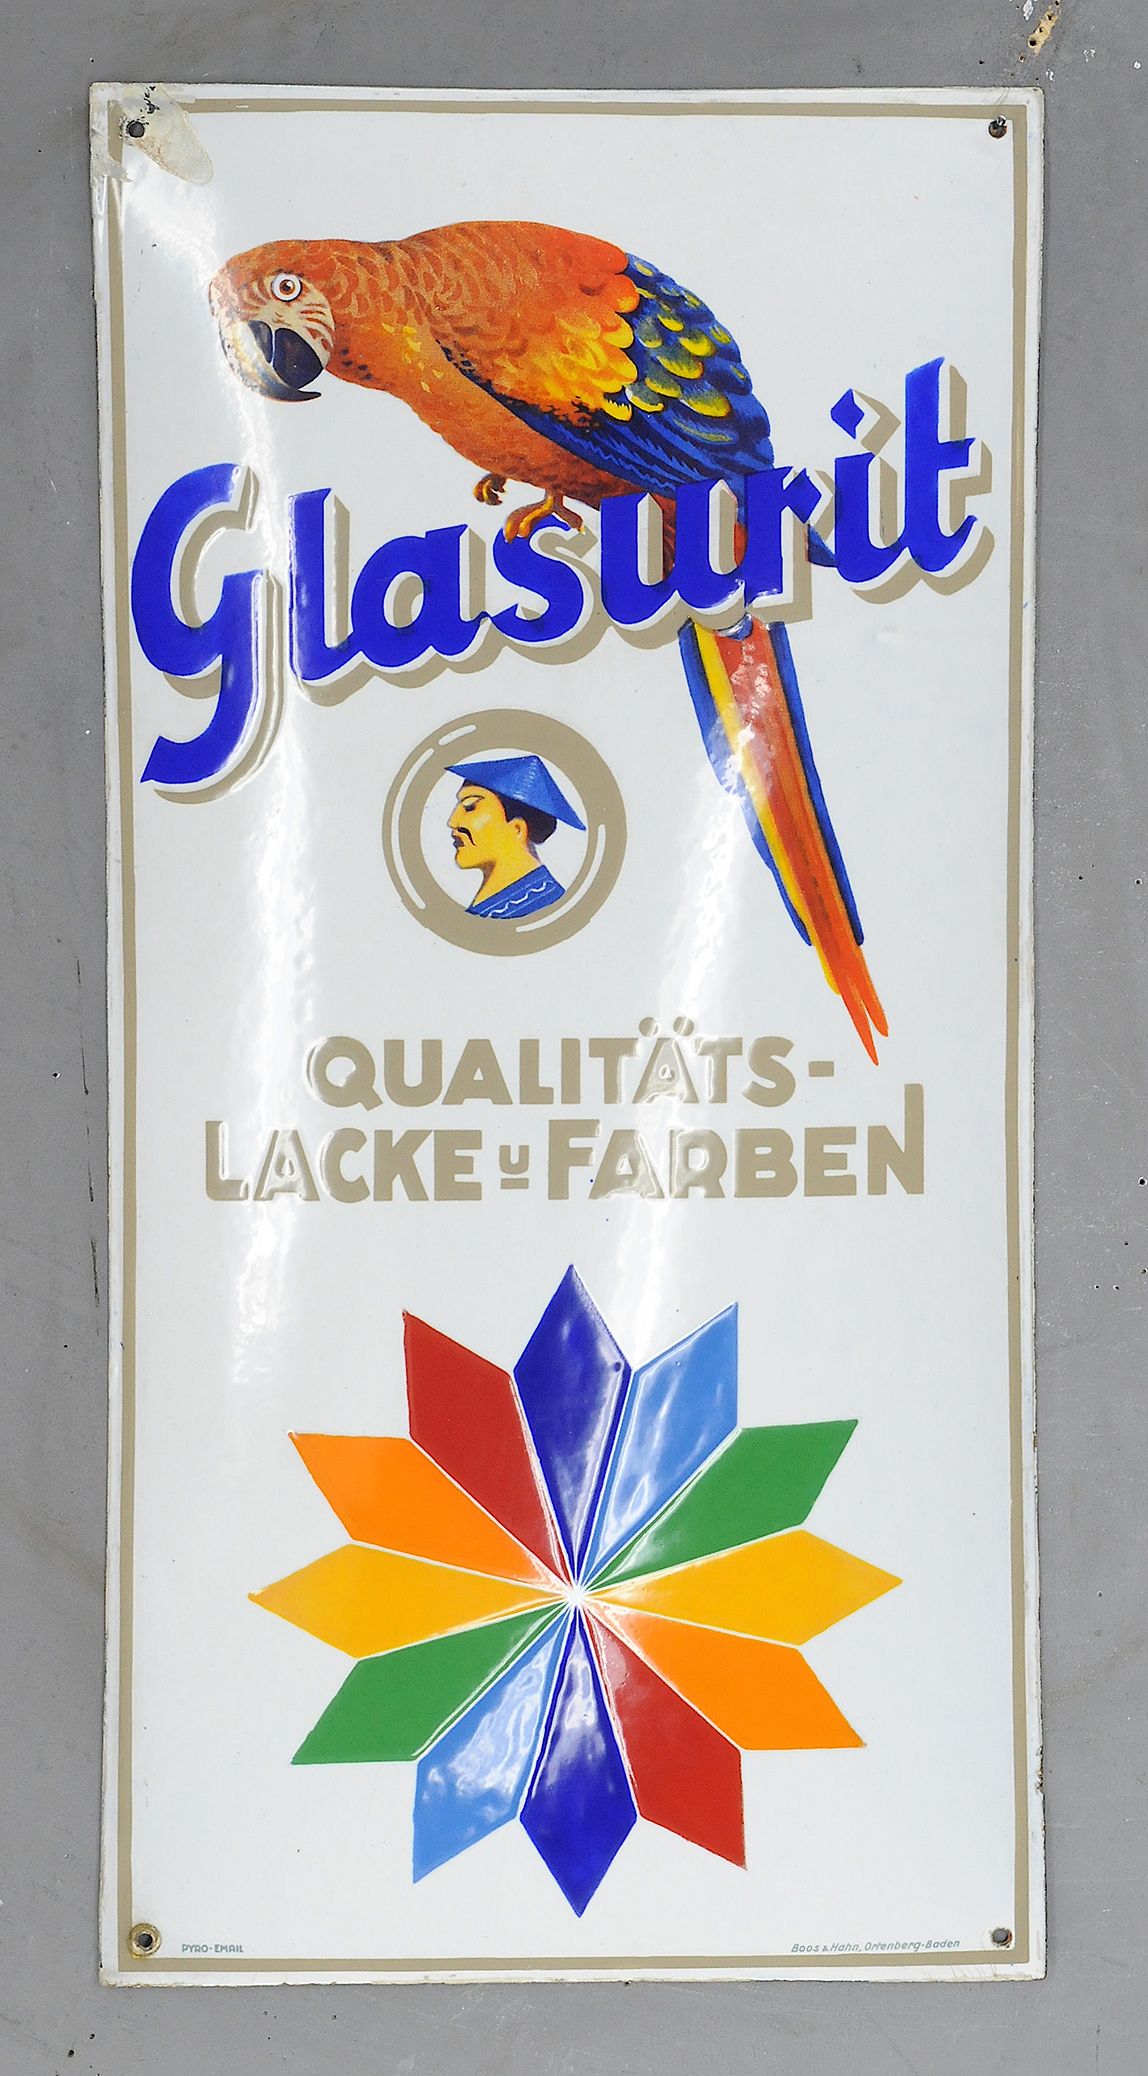 Glasurit Qualitäts-Lacke u. Farben - Image 3 of 3